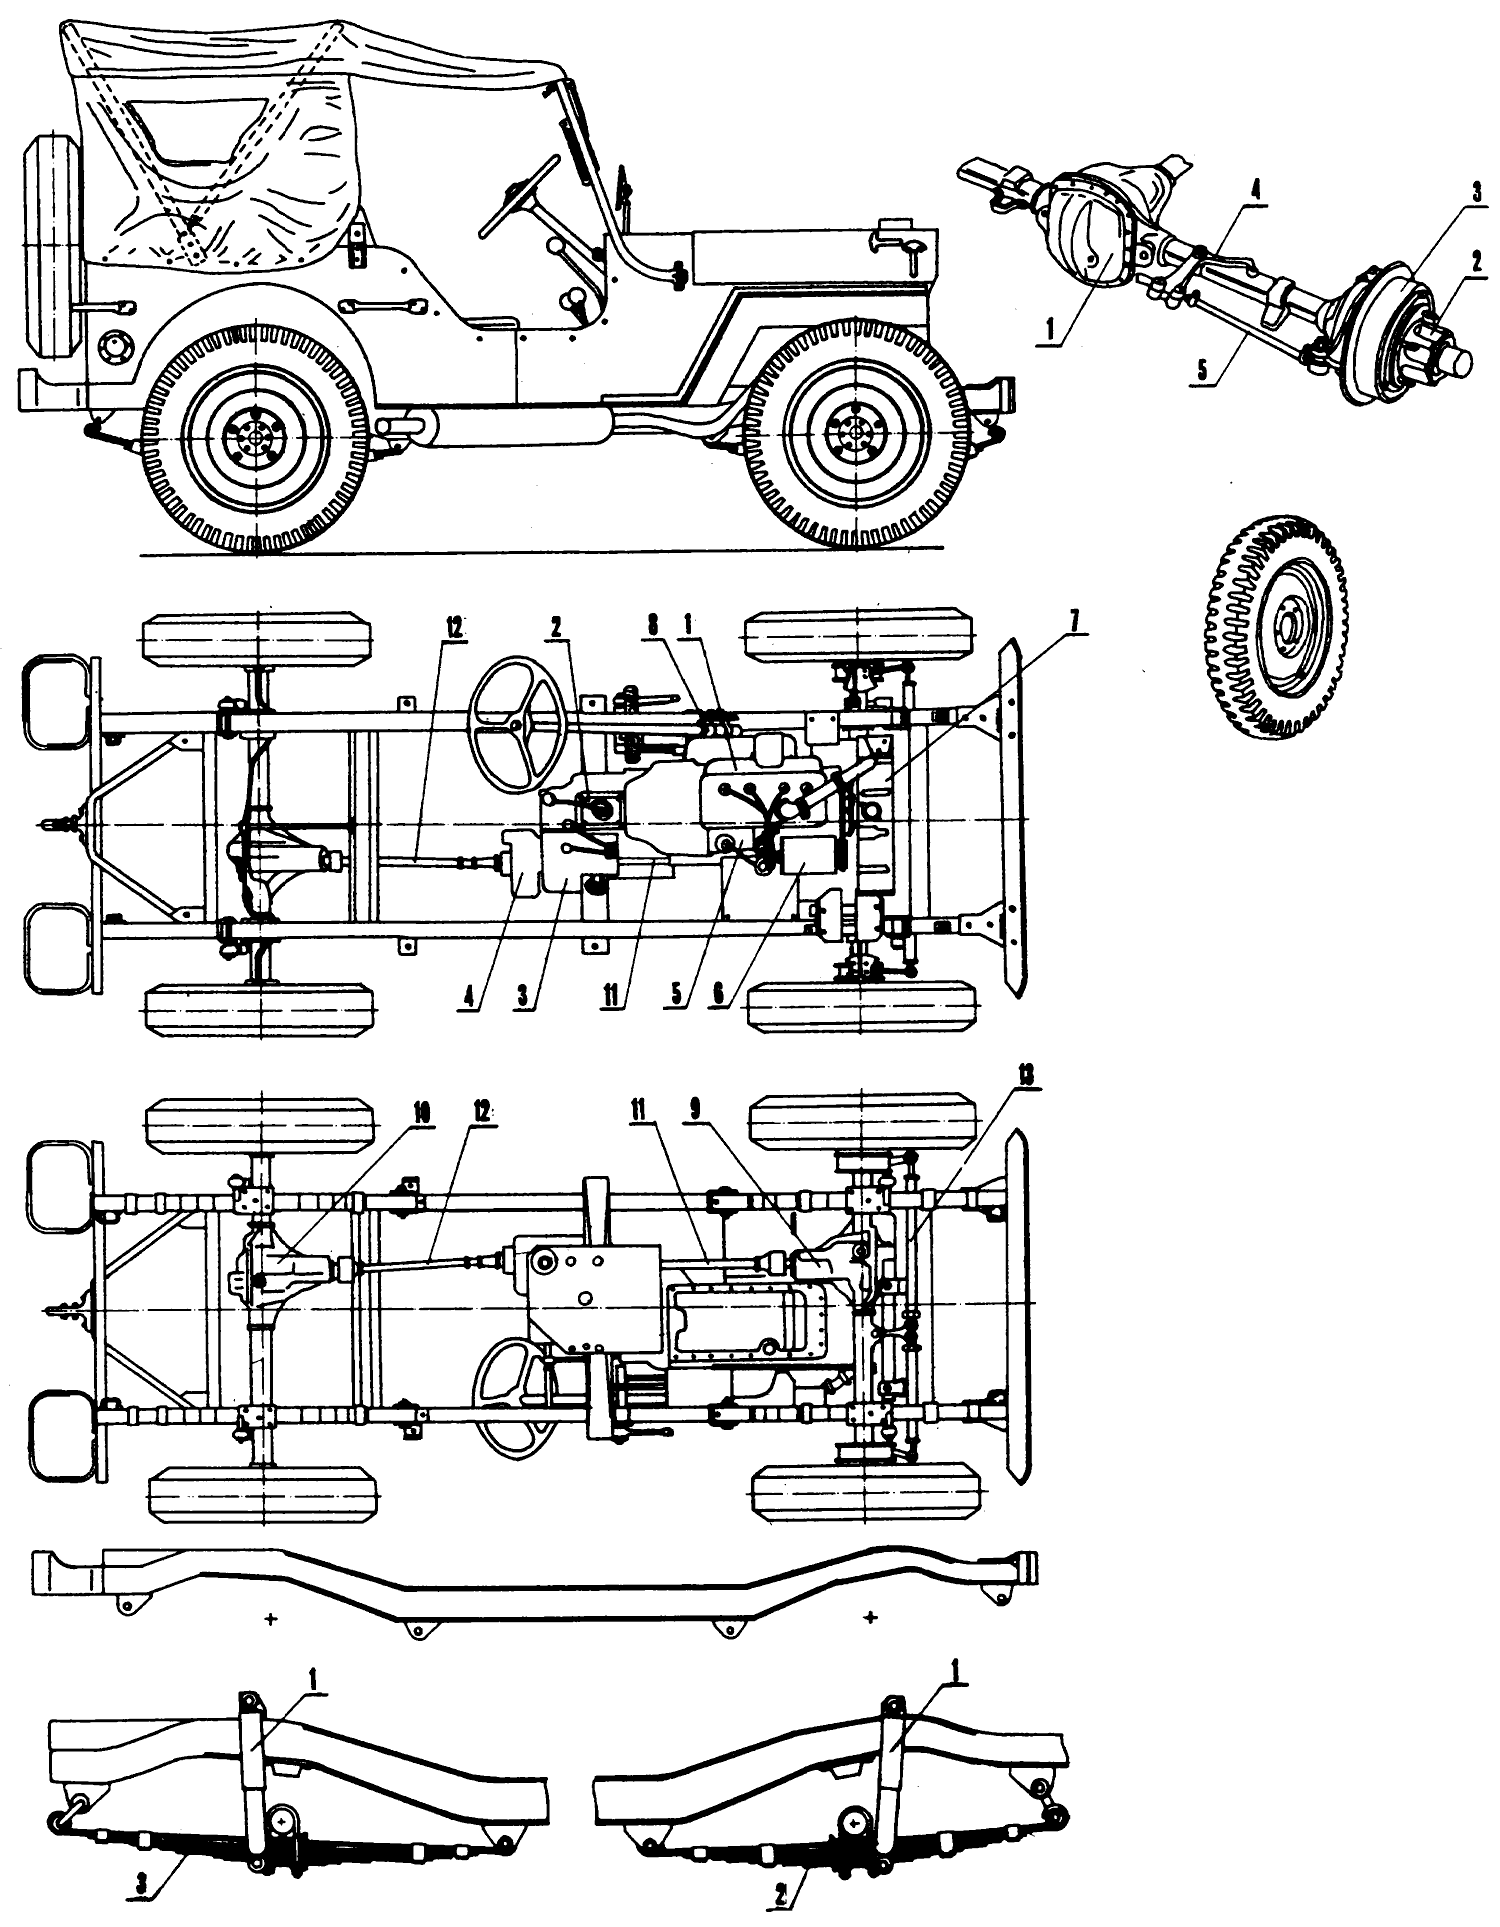 Willys Jeep blueprint